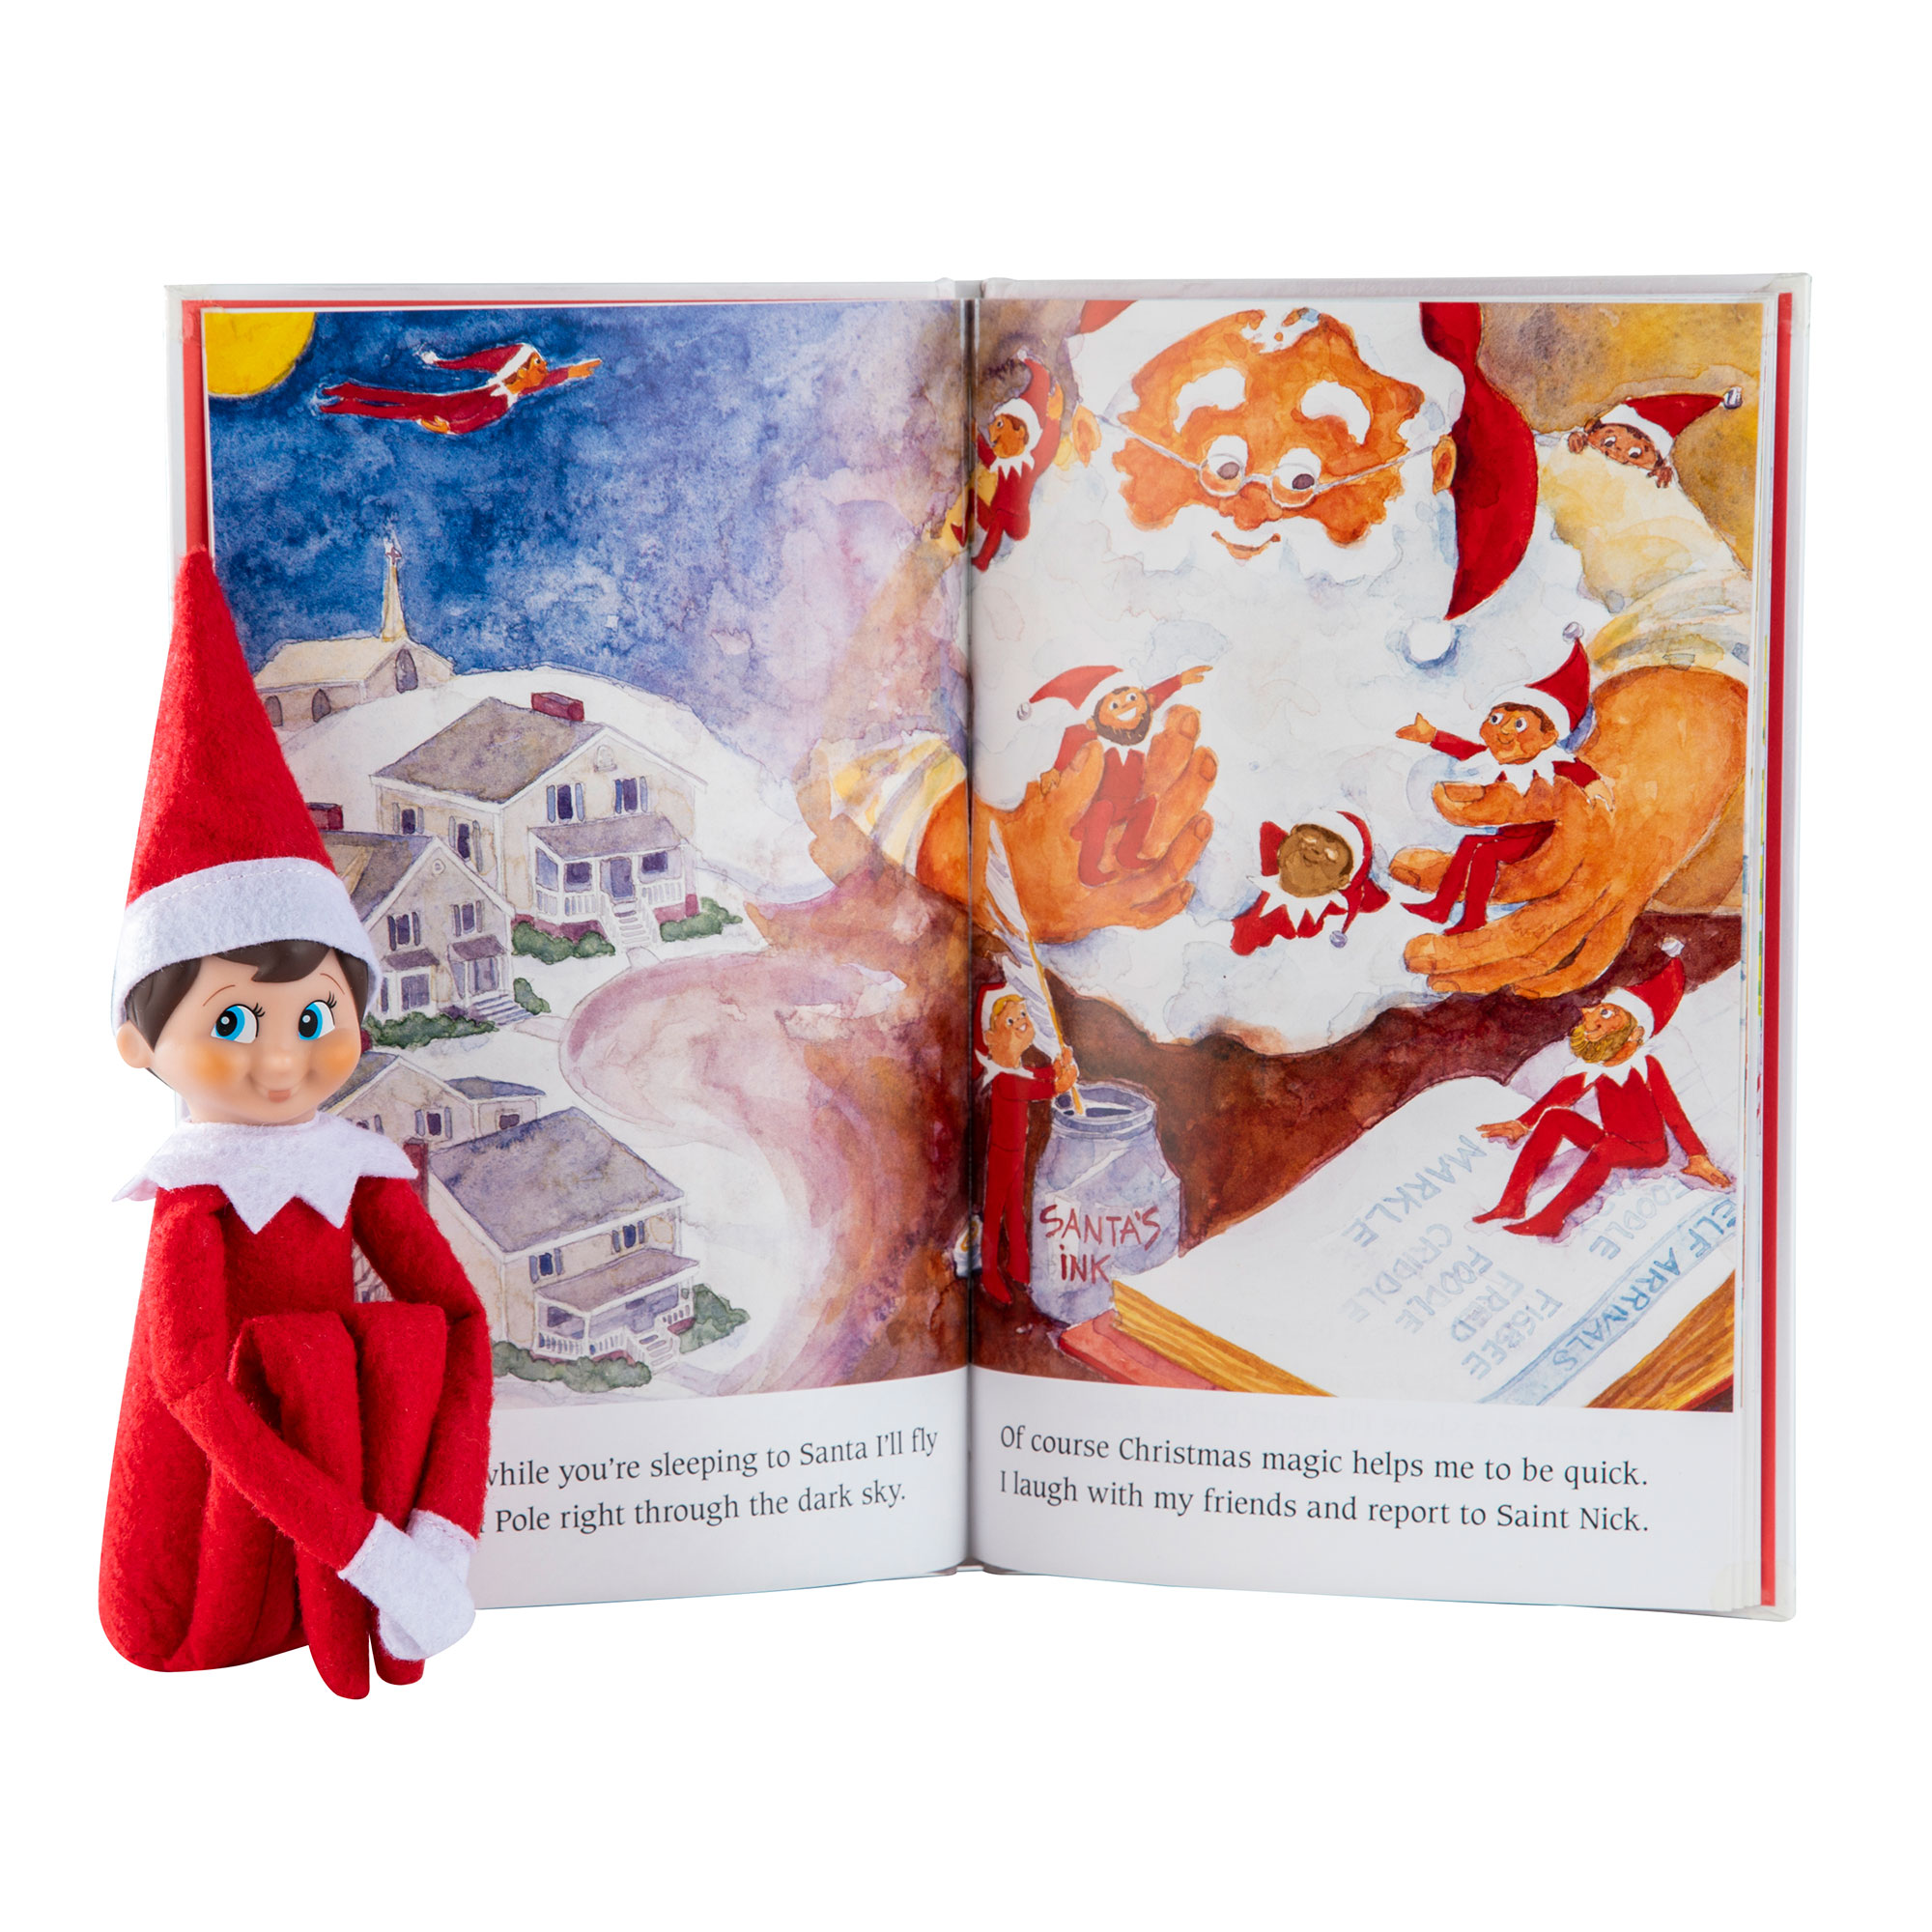 The Elf on the Shelf Christmas Tradition - Boy